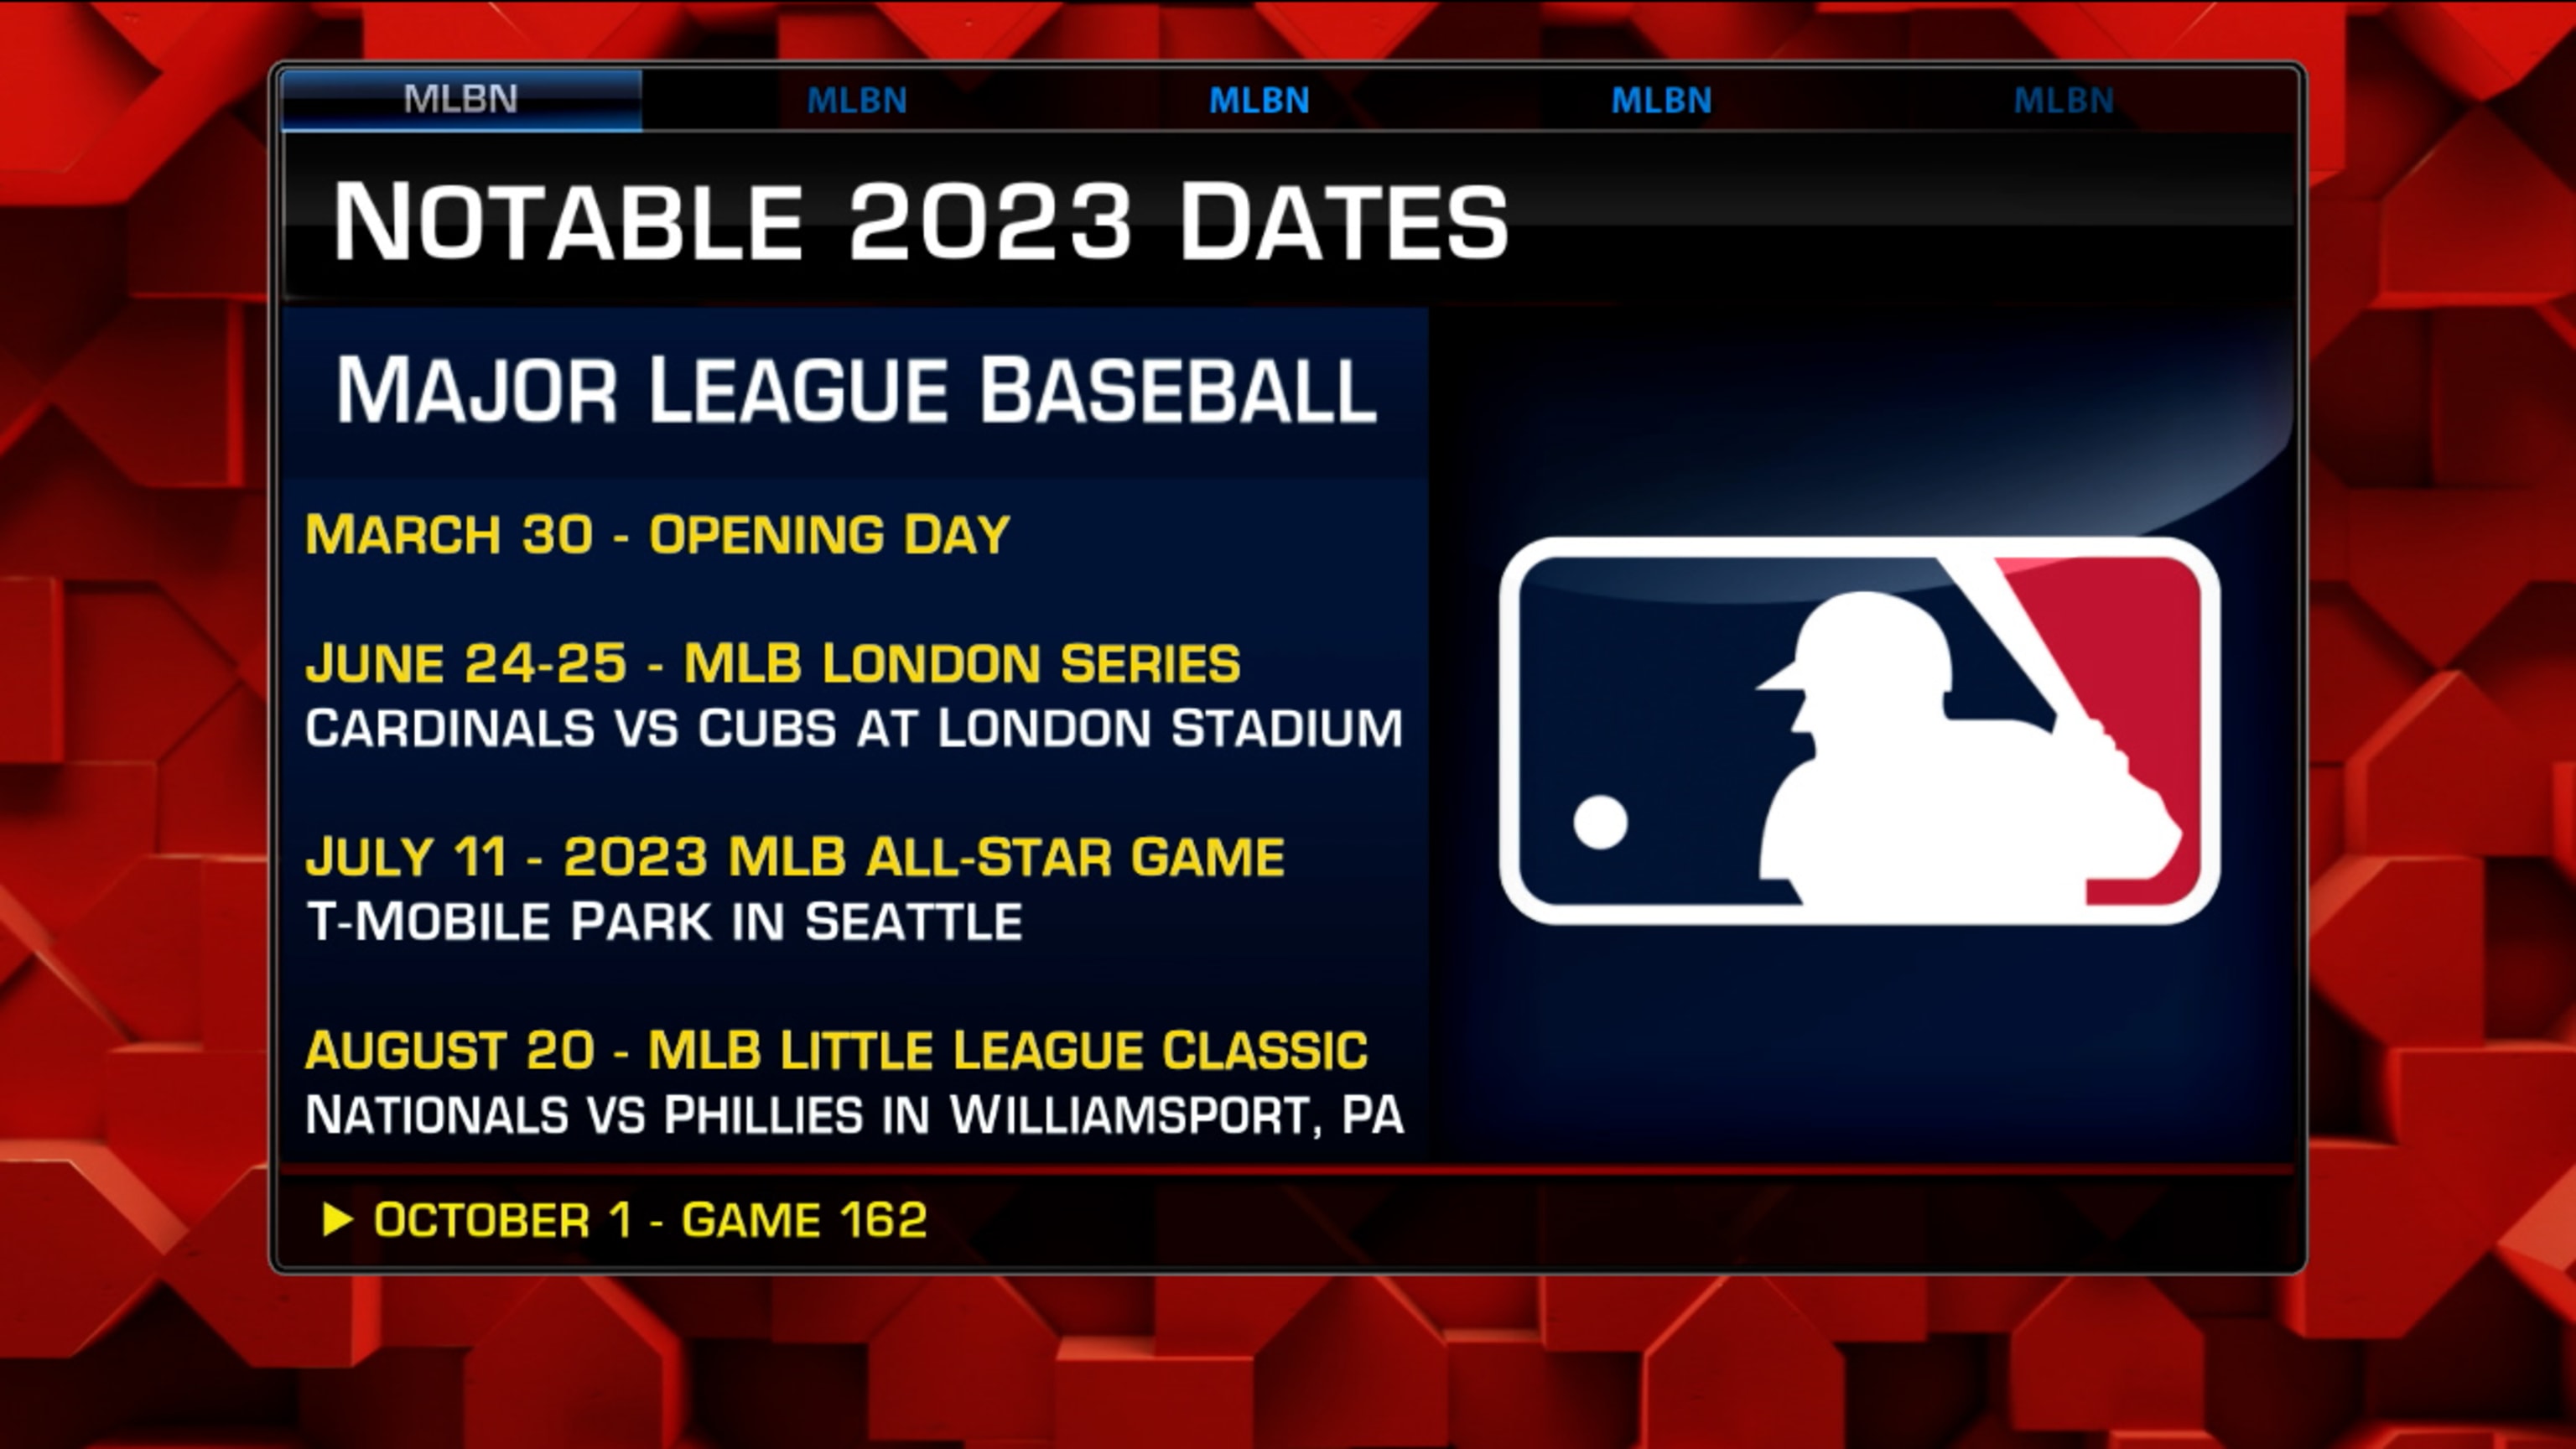 MLB series to watch in 2023 season